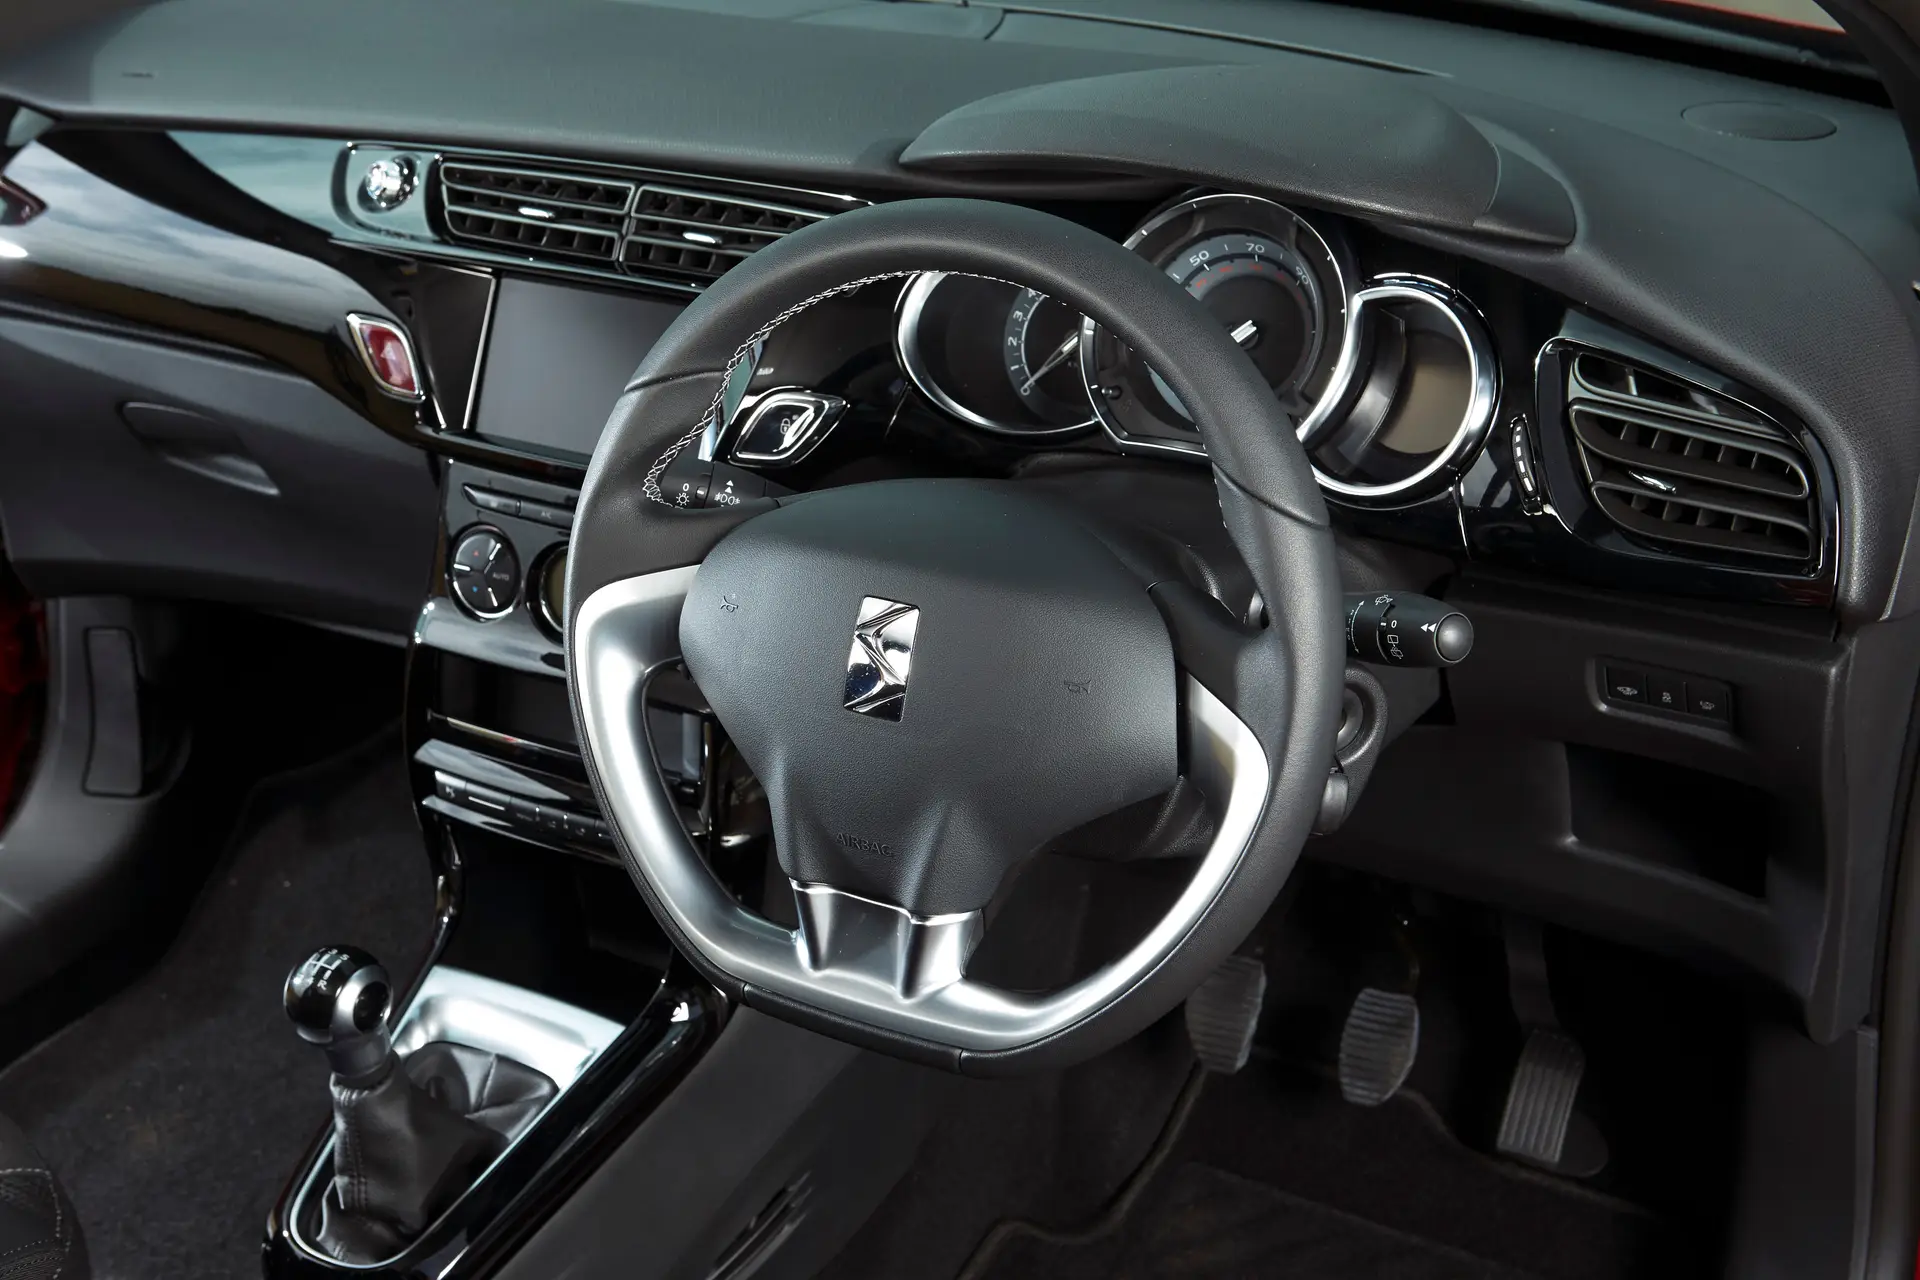 DS3 Cabrio (2013-2018) Review: interior close up photo of the DS3 Cabrio dashboard 